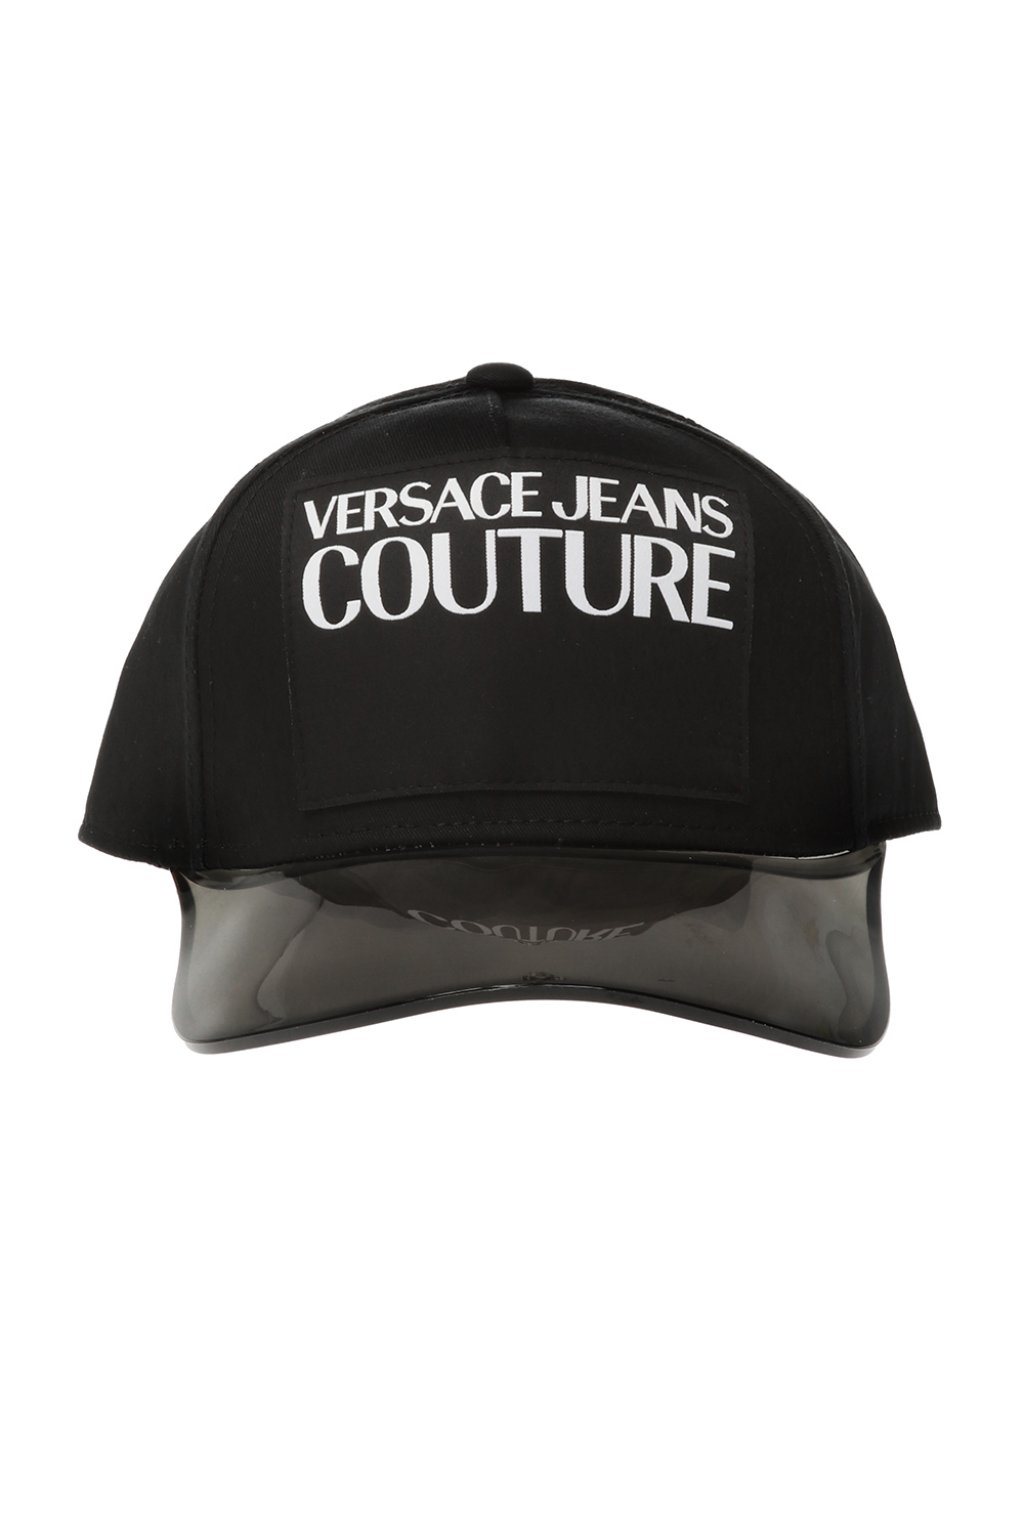 versace jeans baseball cap